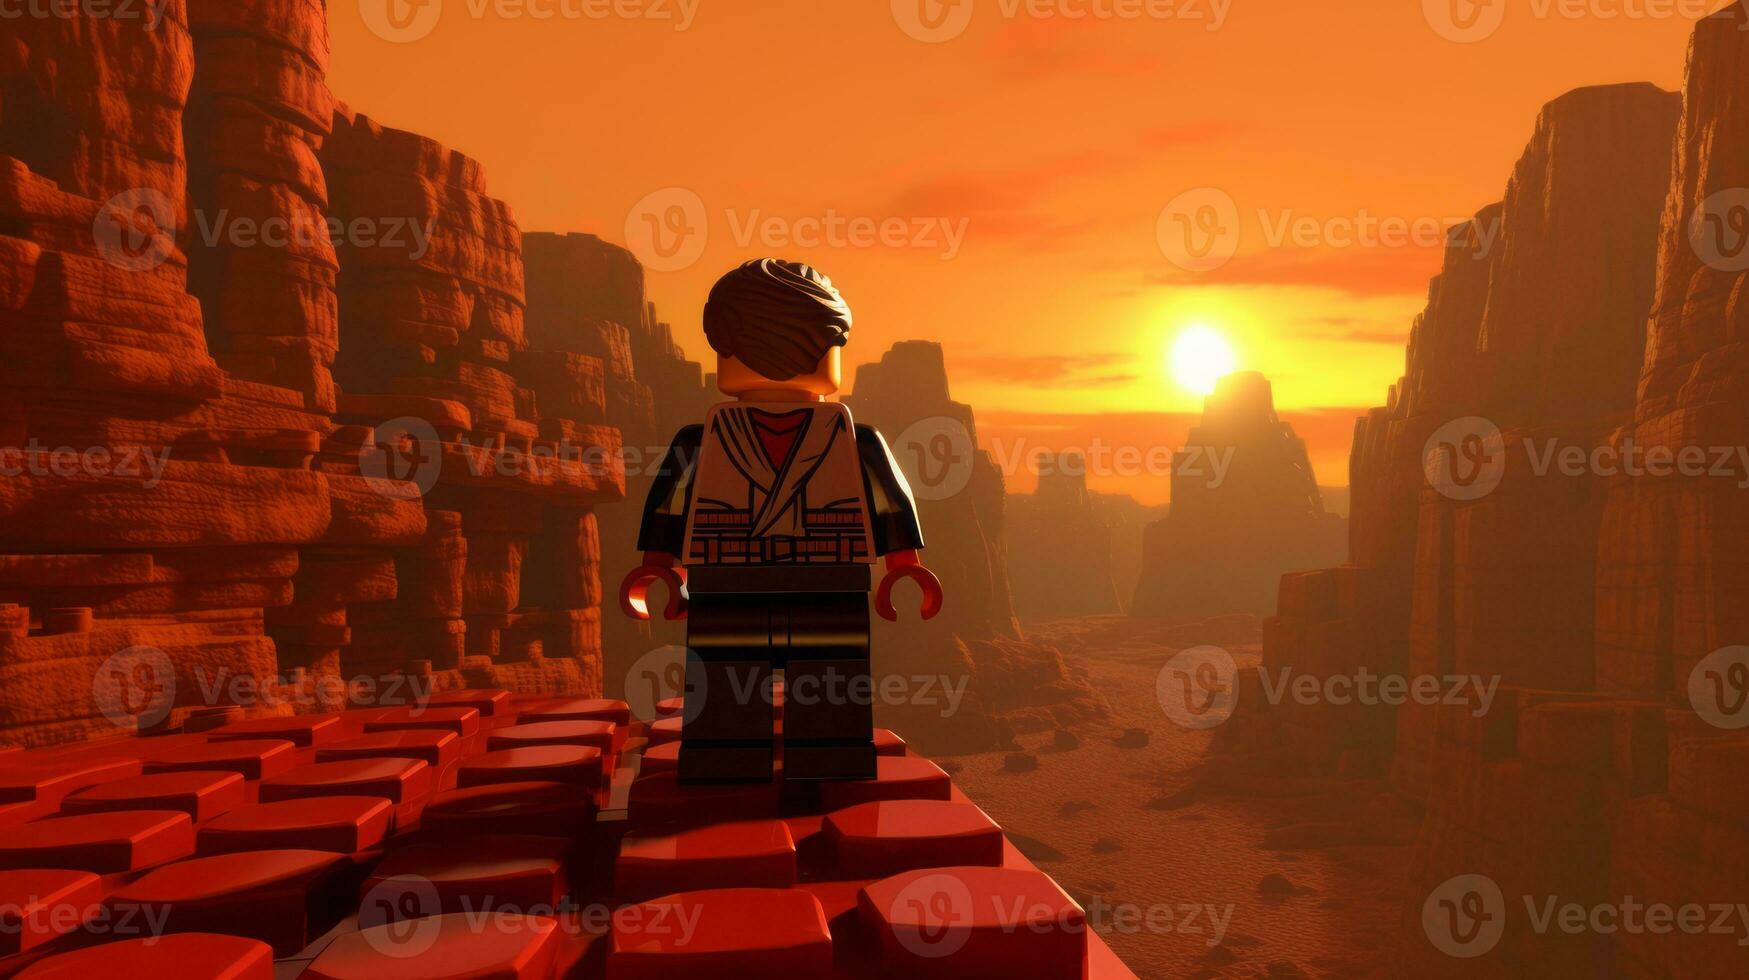 Lego character exploring a epic lego world AI Generative photo